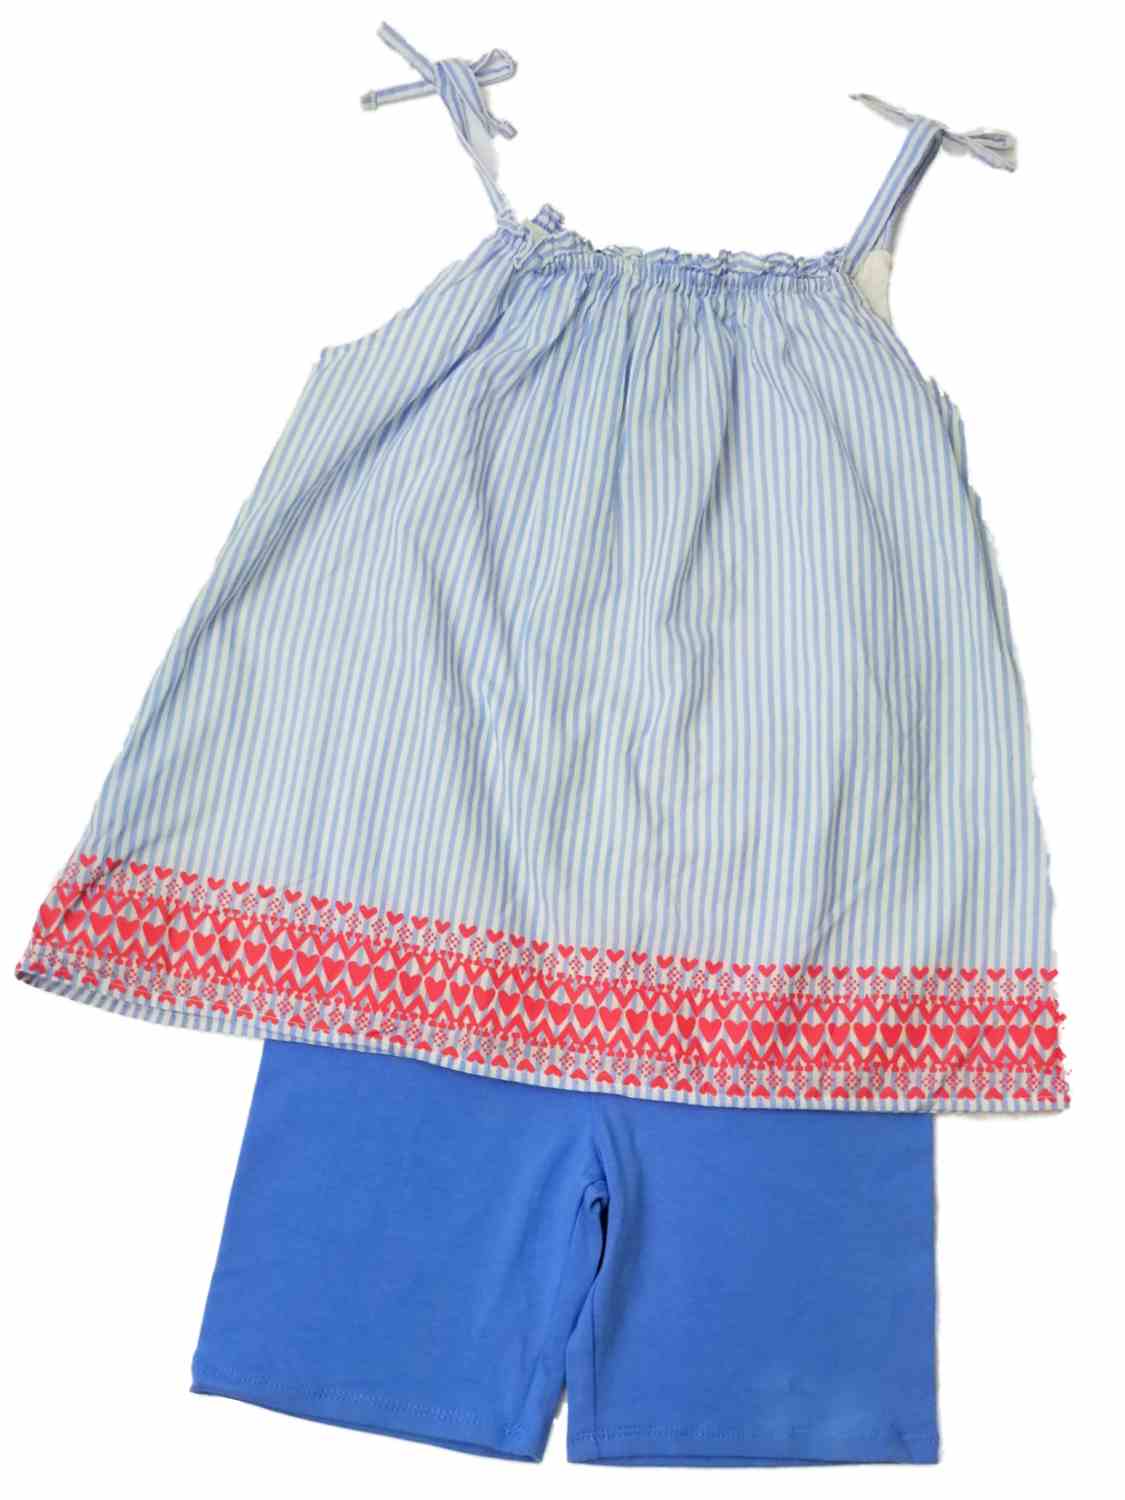 Toughskins Girls Summer Outfit Blue & White Stripe Tank Top Shirt & Blue Shorts